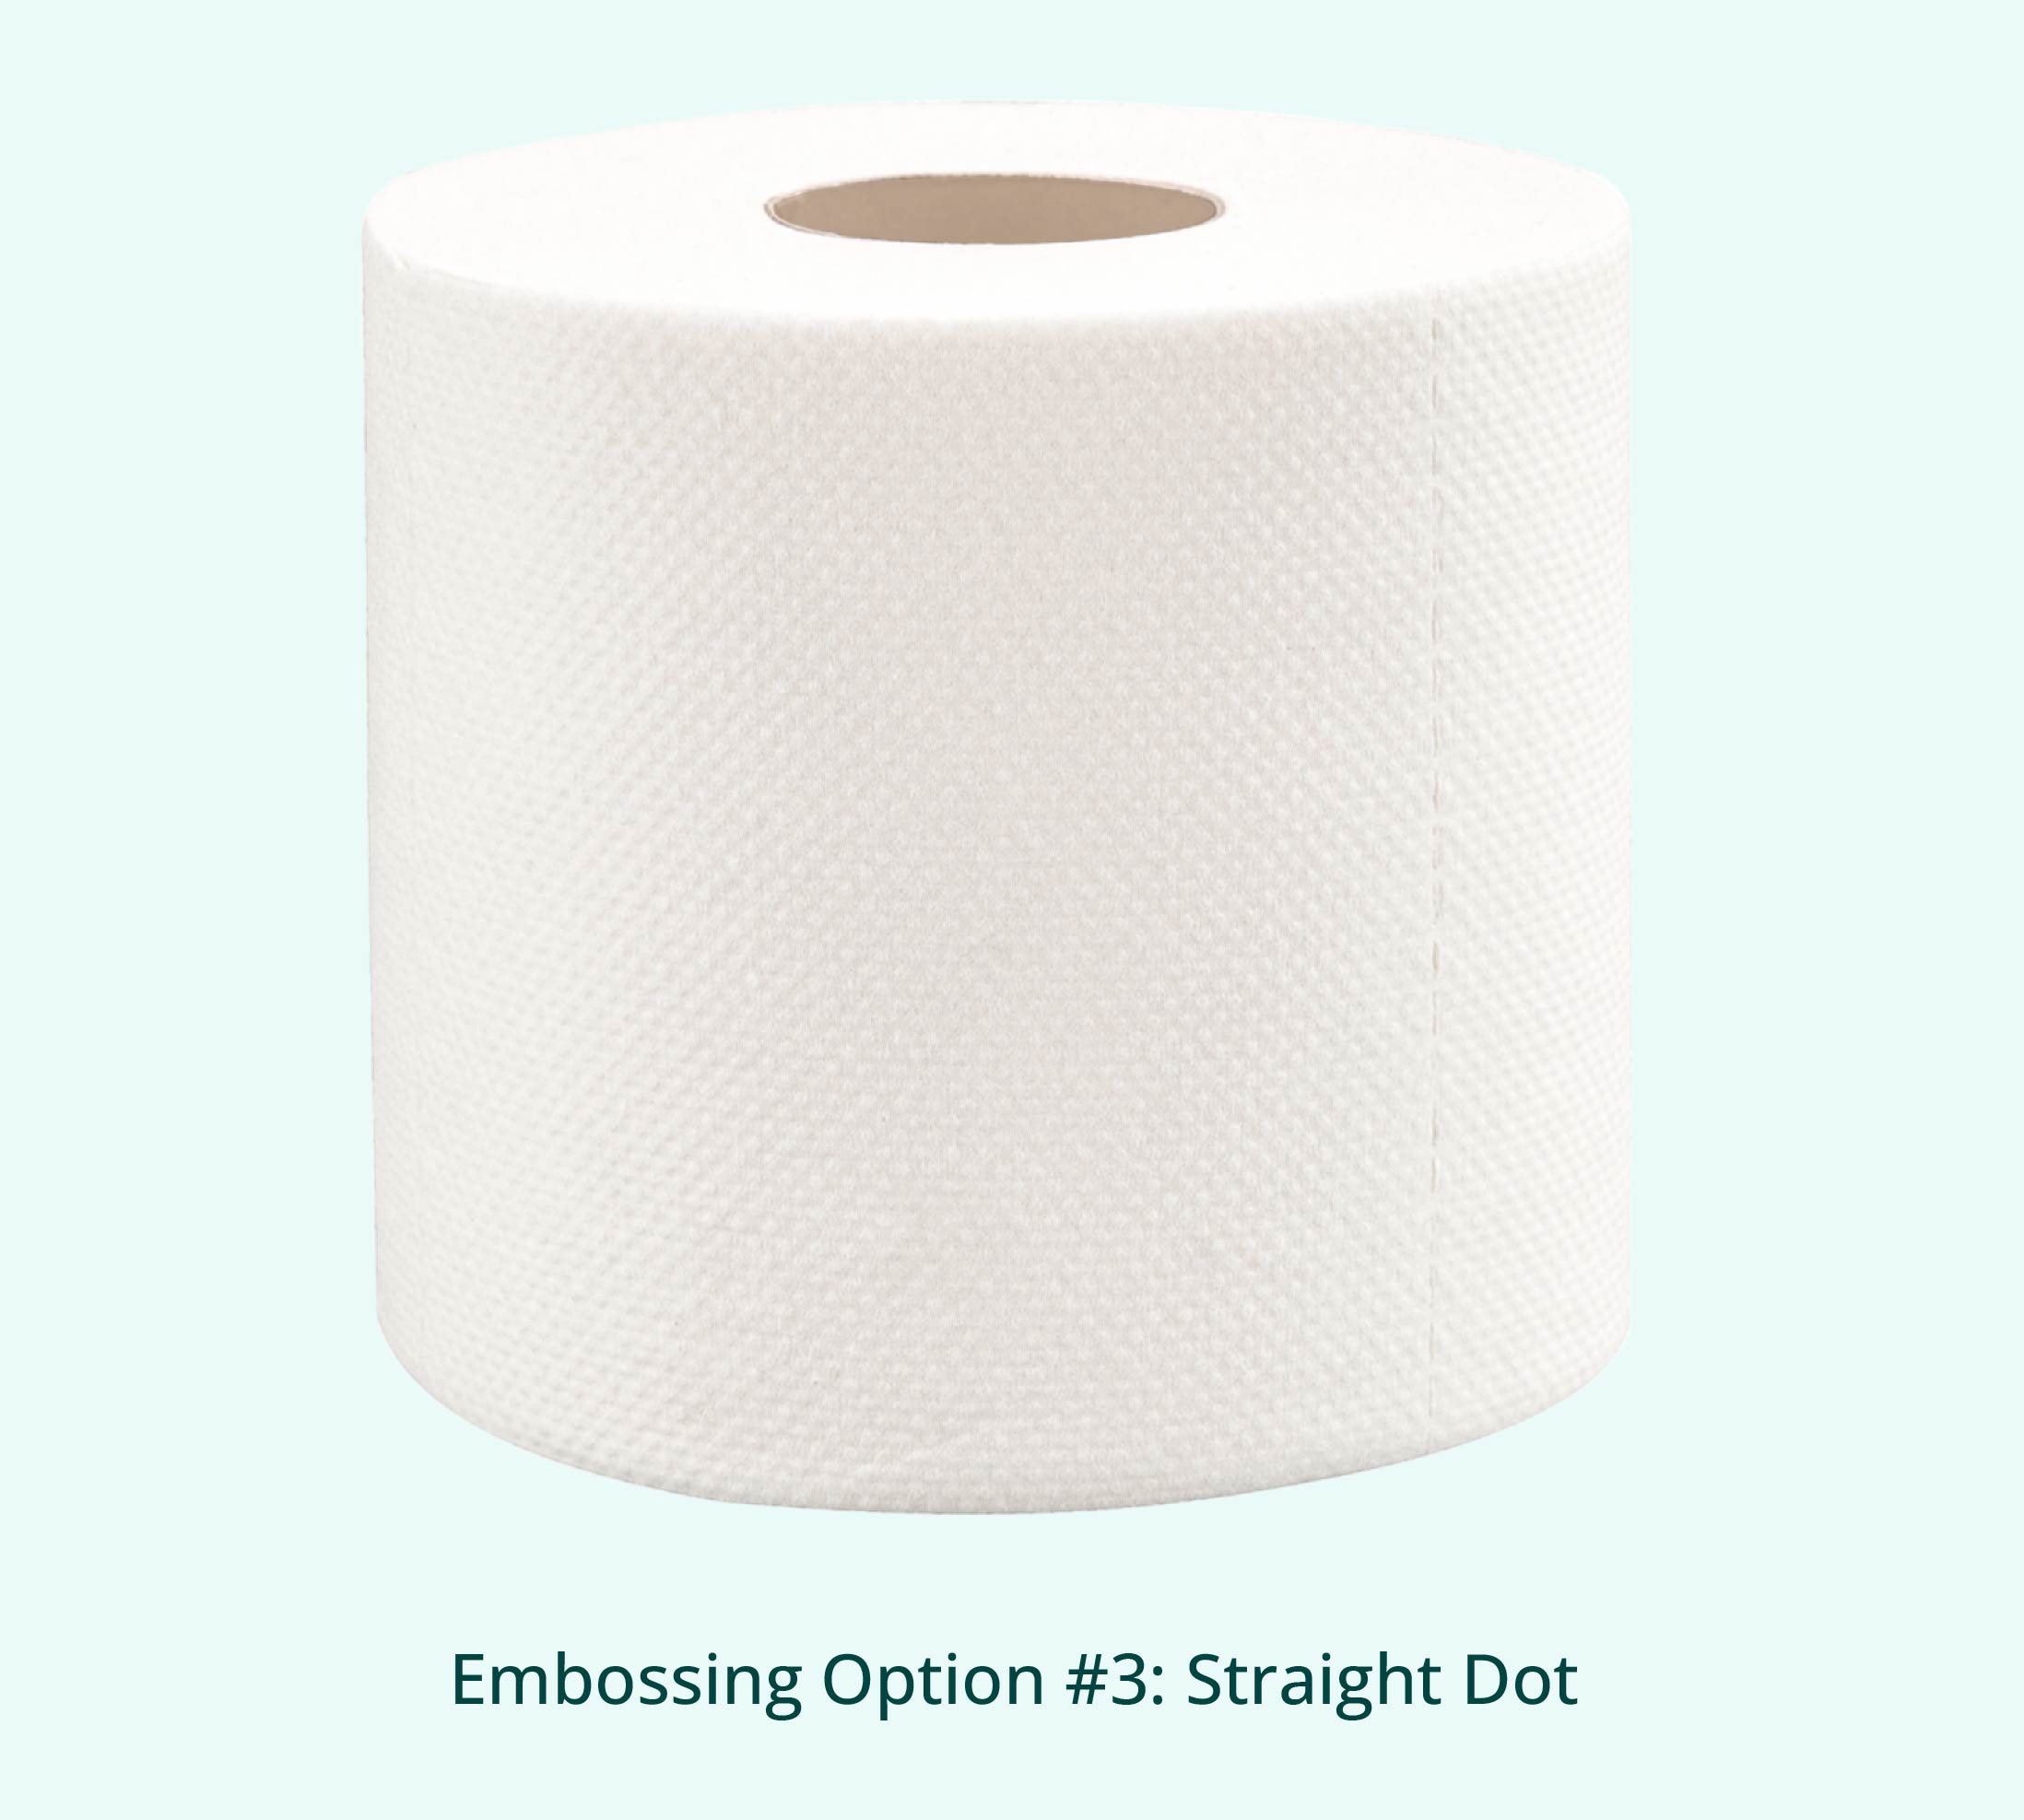 Embossing Option #3: Straight Dot